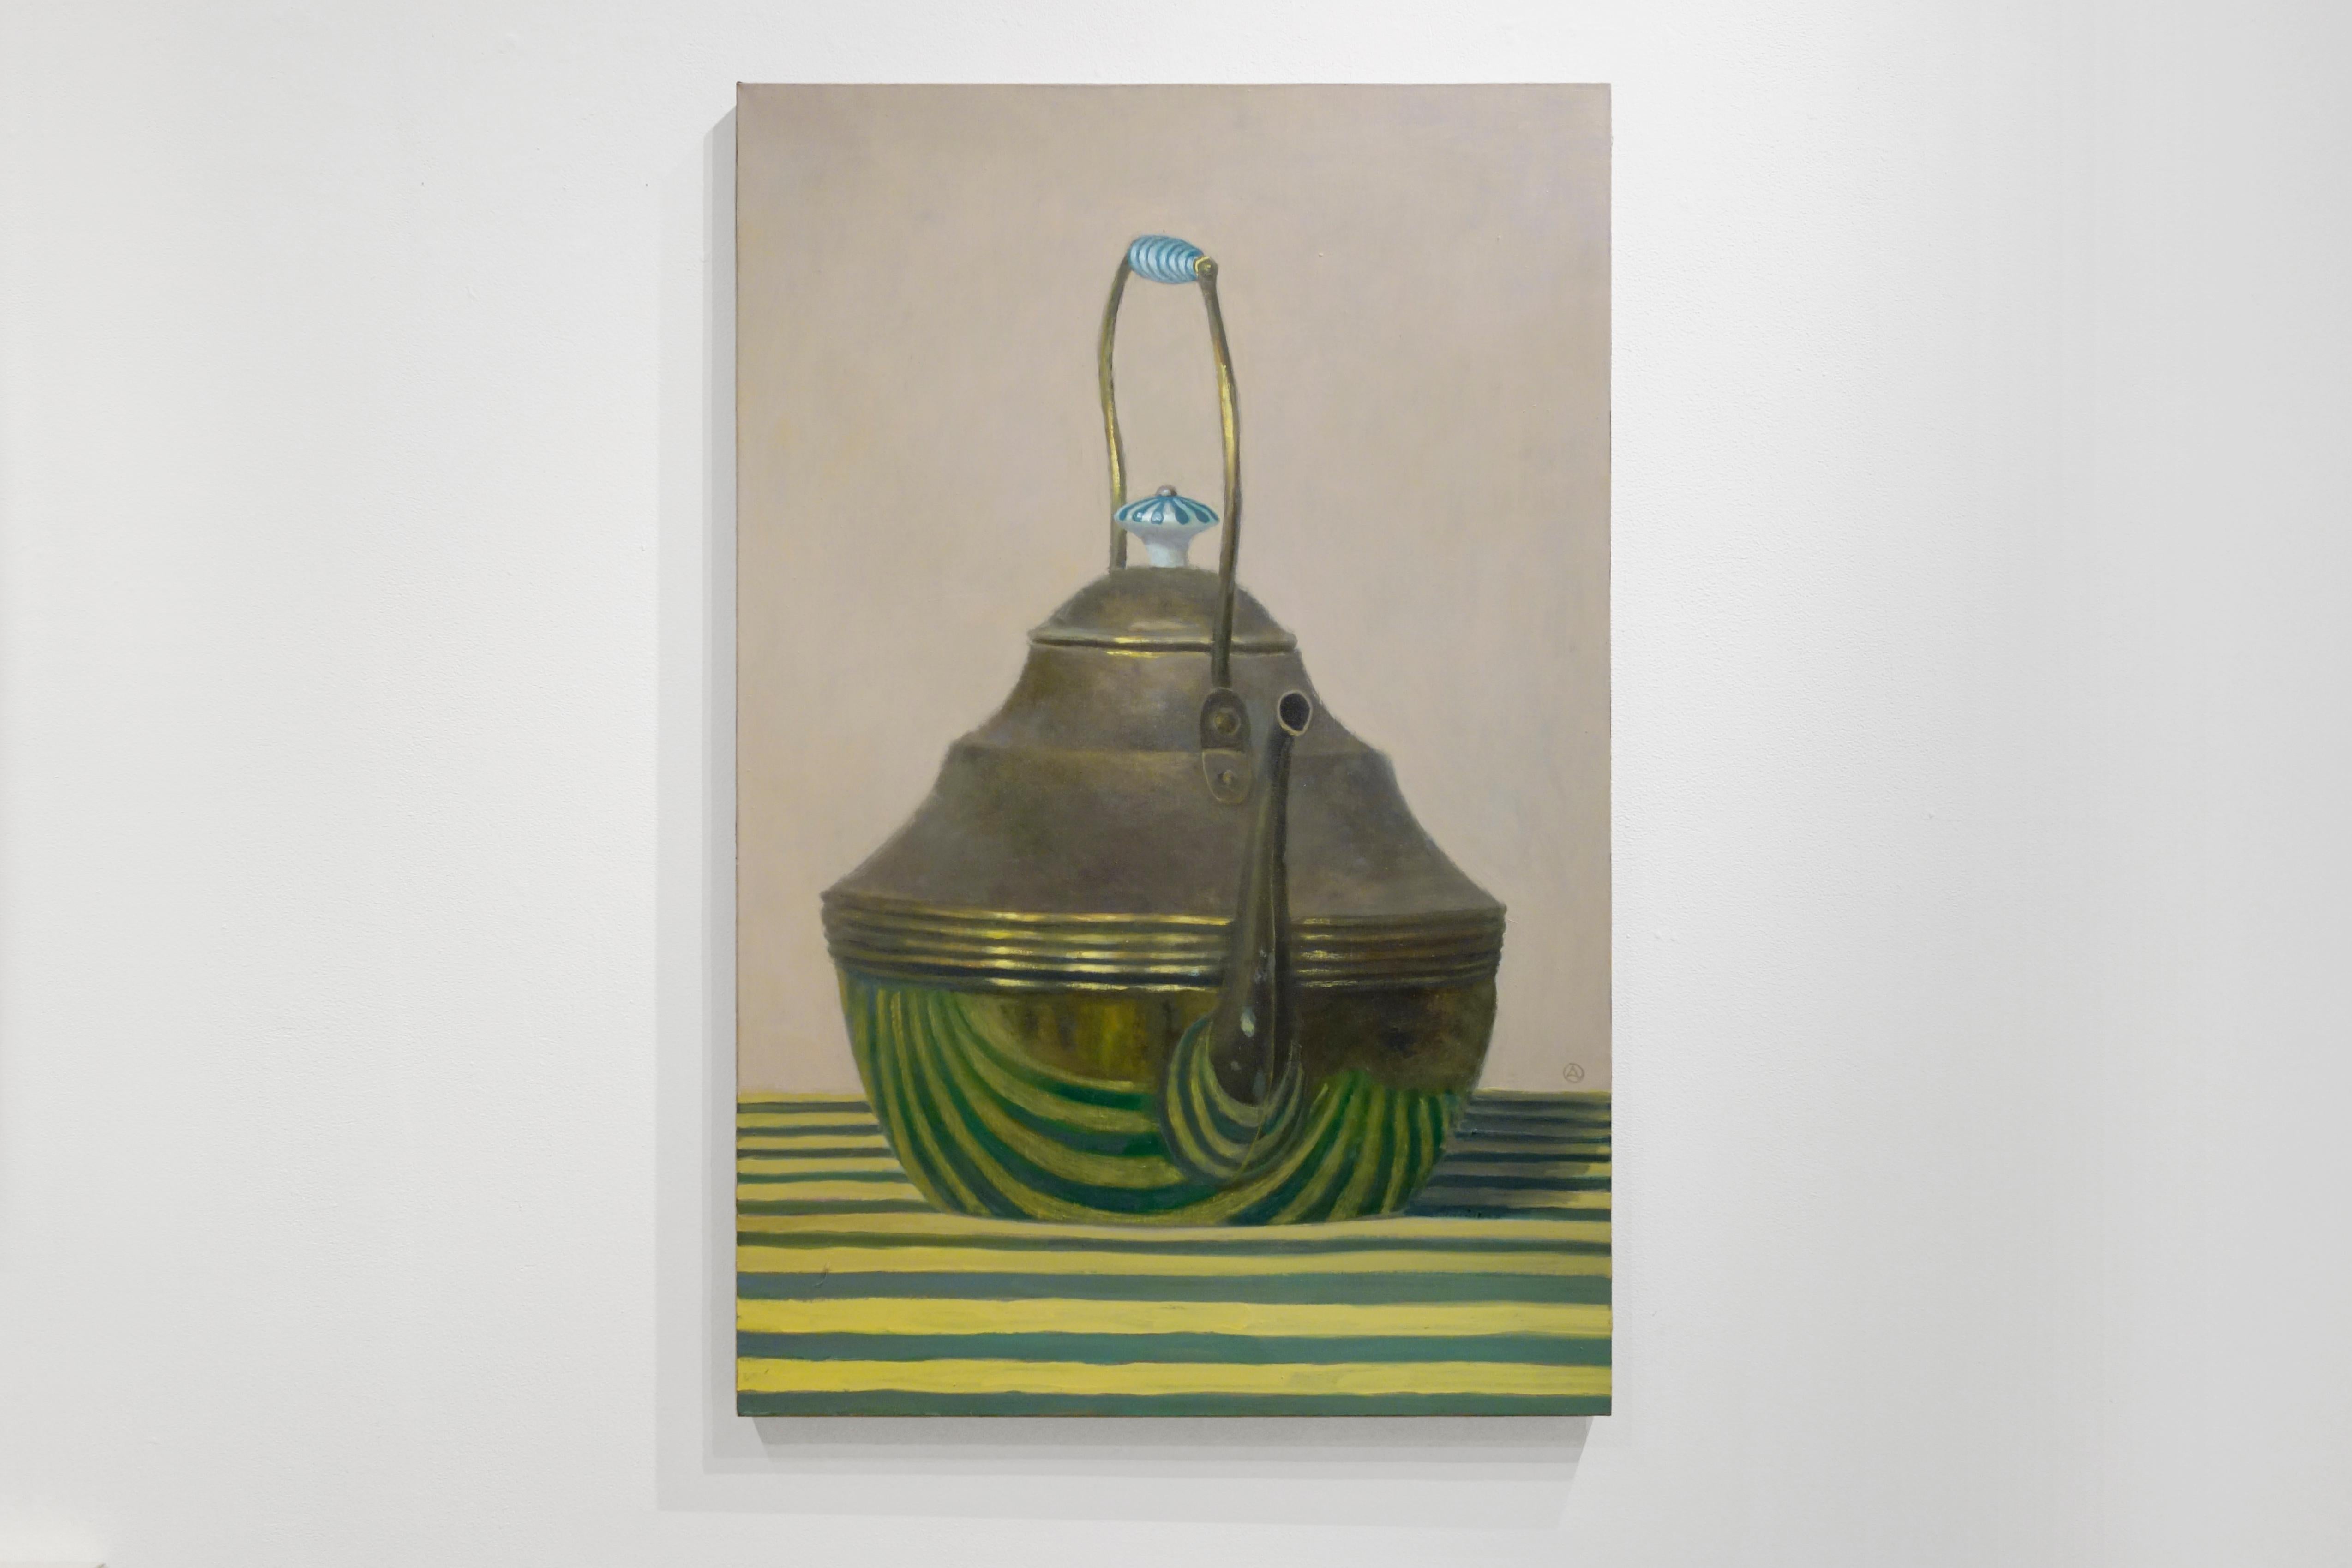 TALL TEAPOT, green and yellow cloth, reflection in teapot, still life - Painting by Olga Antonova